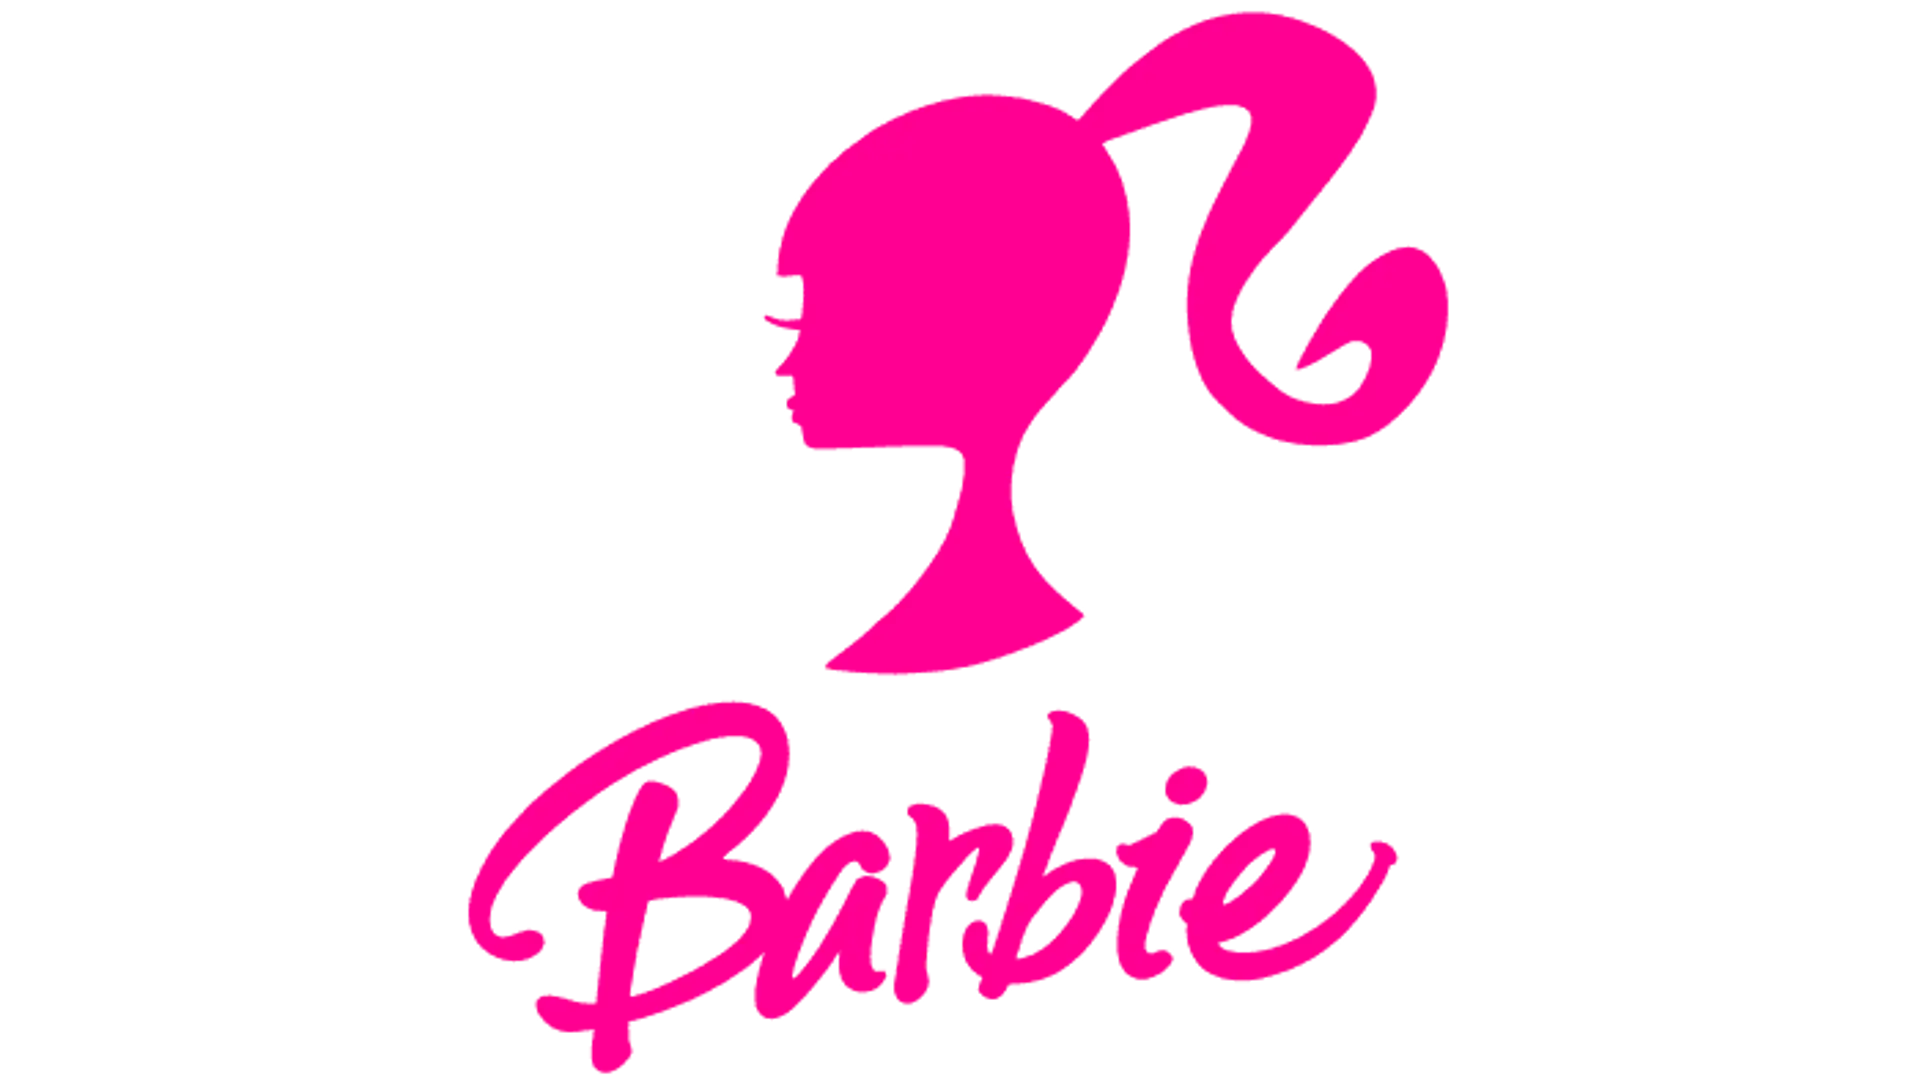 Barbie head logo